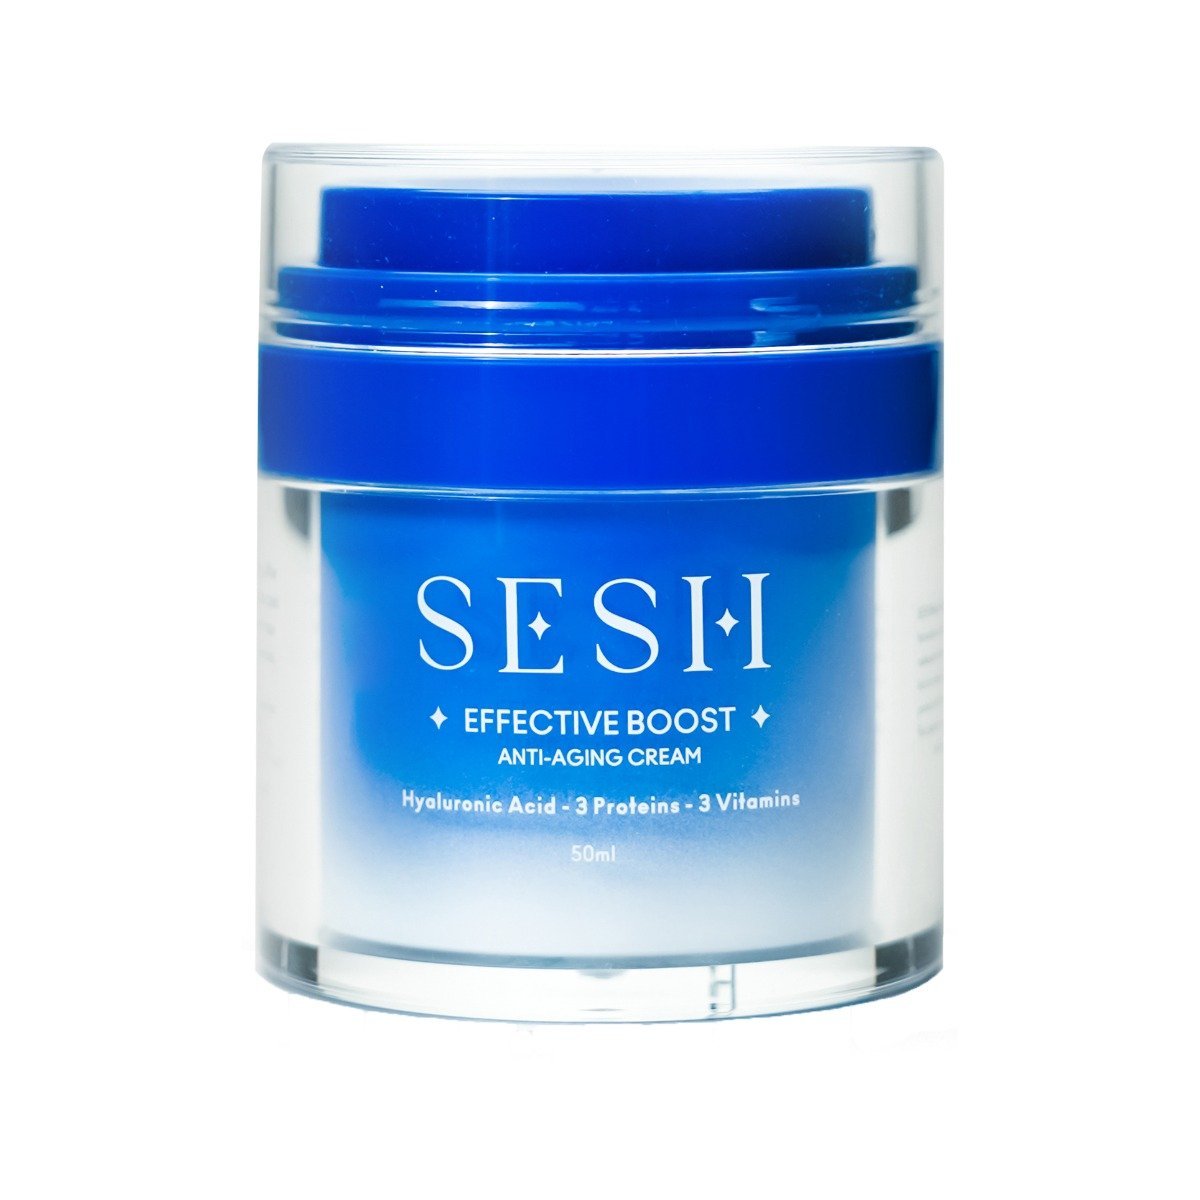 Sesh Effective Boost Anti-Aging Cream – 50ml - Bloom Pharmacy